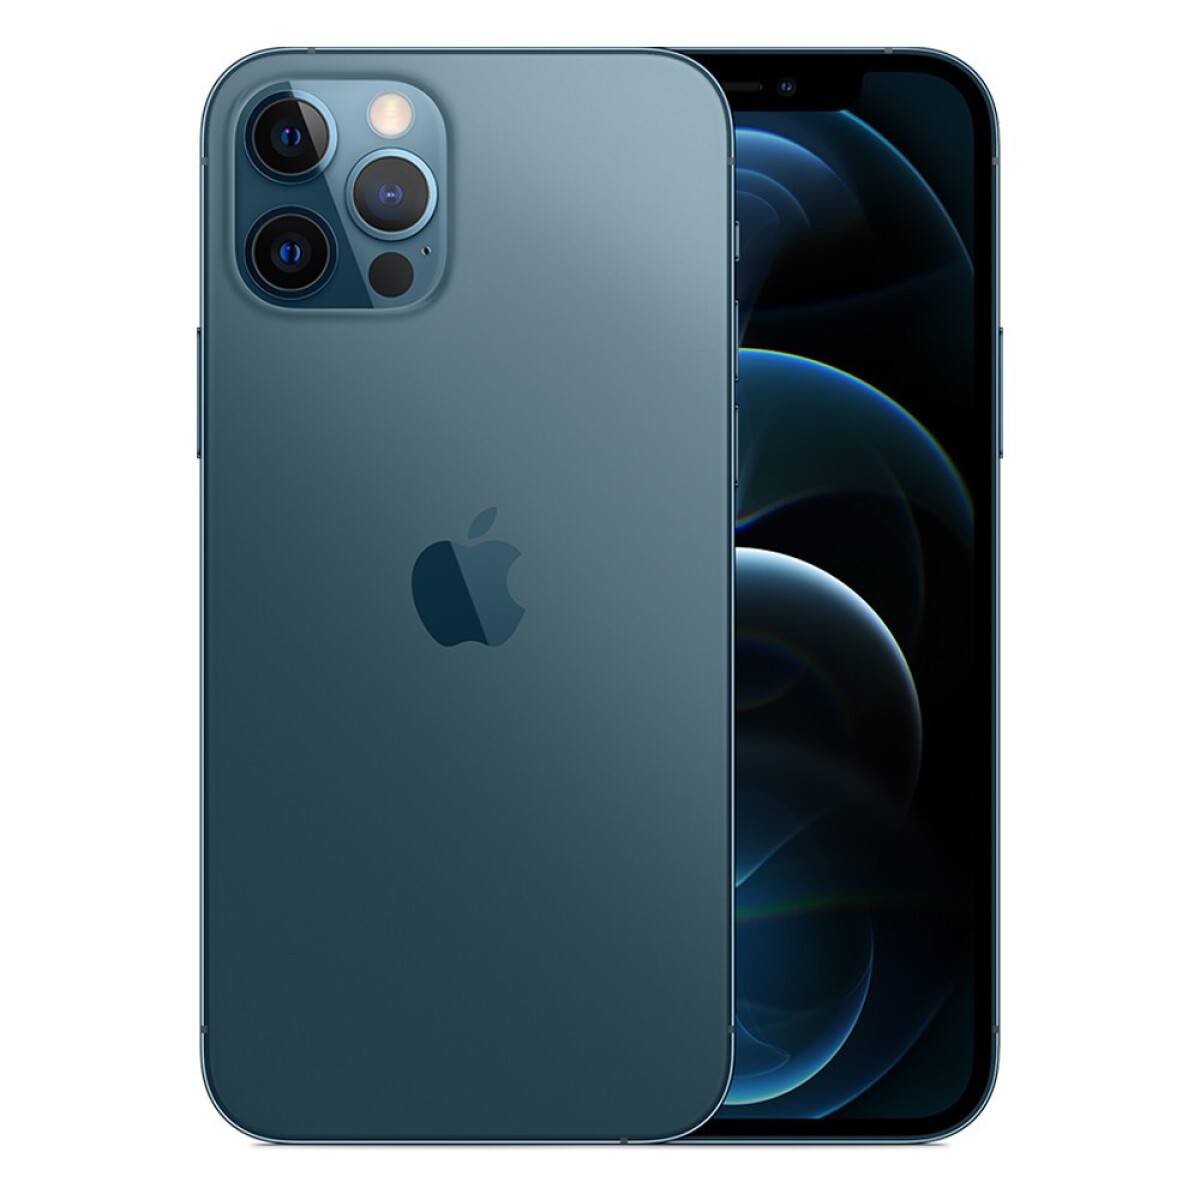 Celular apple iphone 12 pro 256gb - Pacific blue 